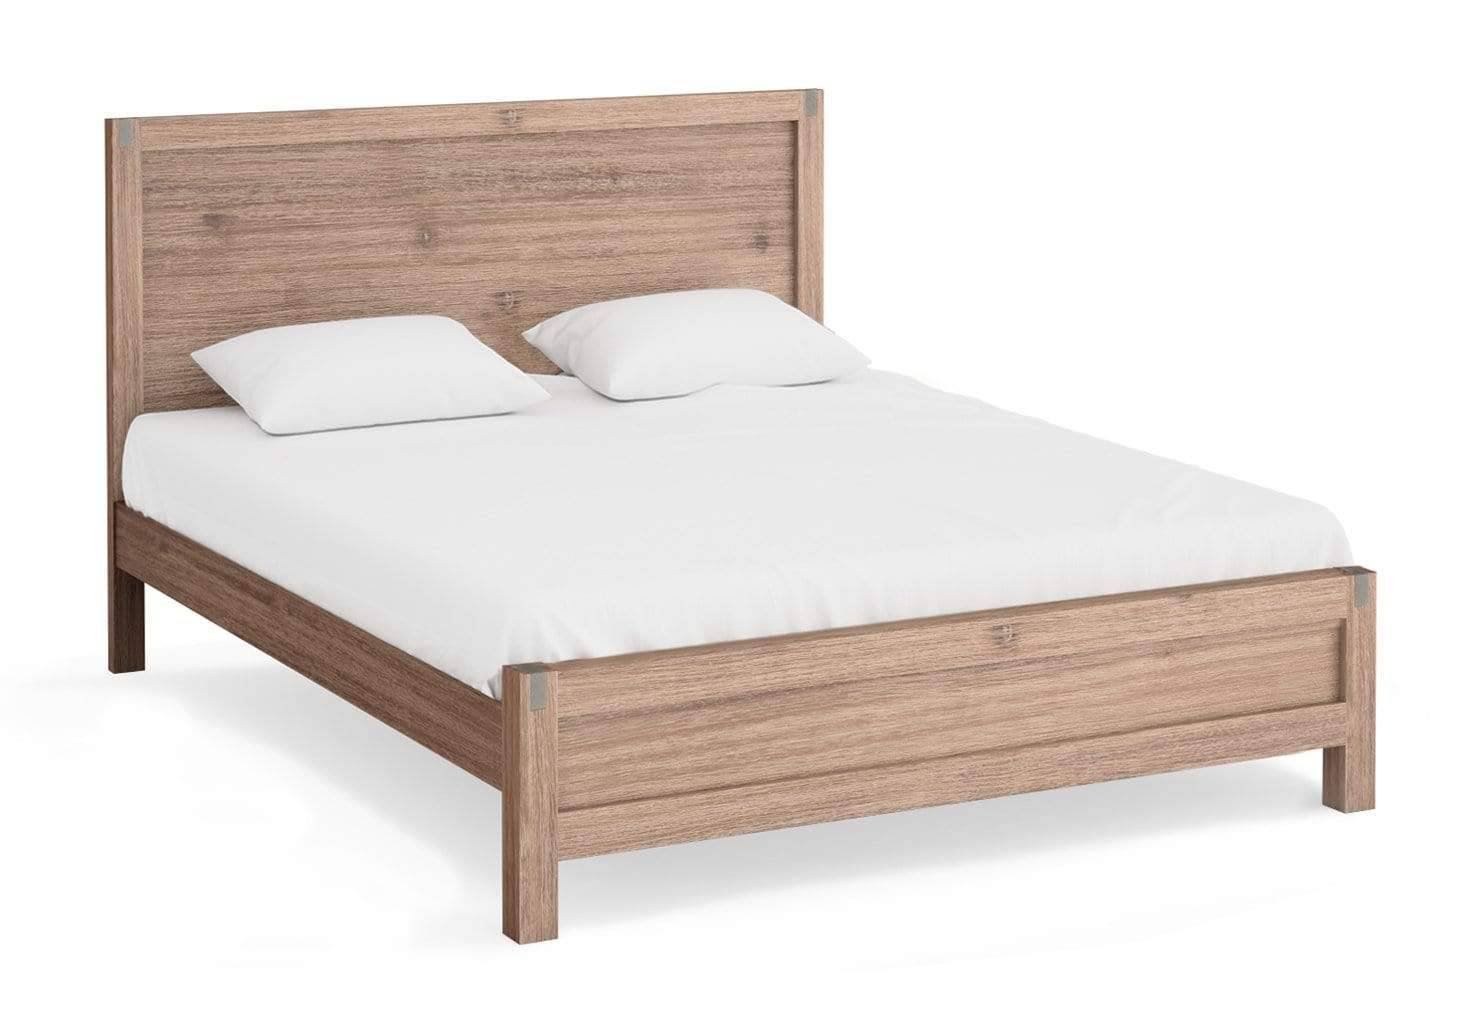 Nowra King Bed - Newstart Furniture